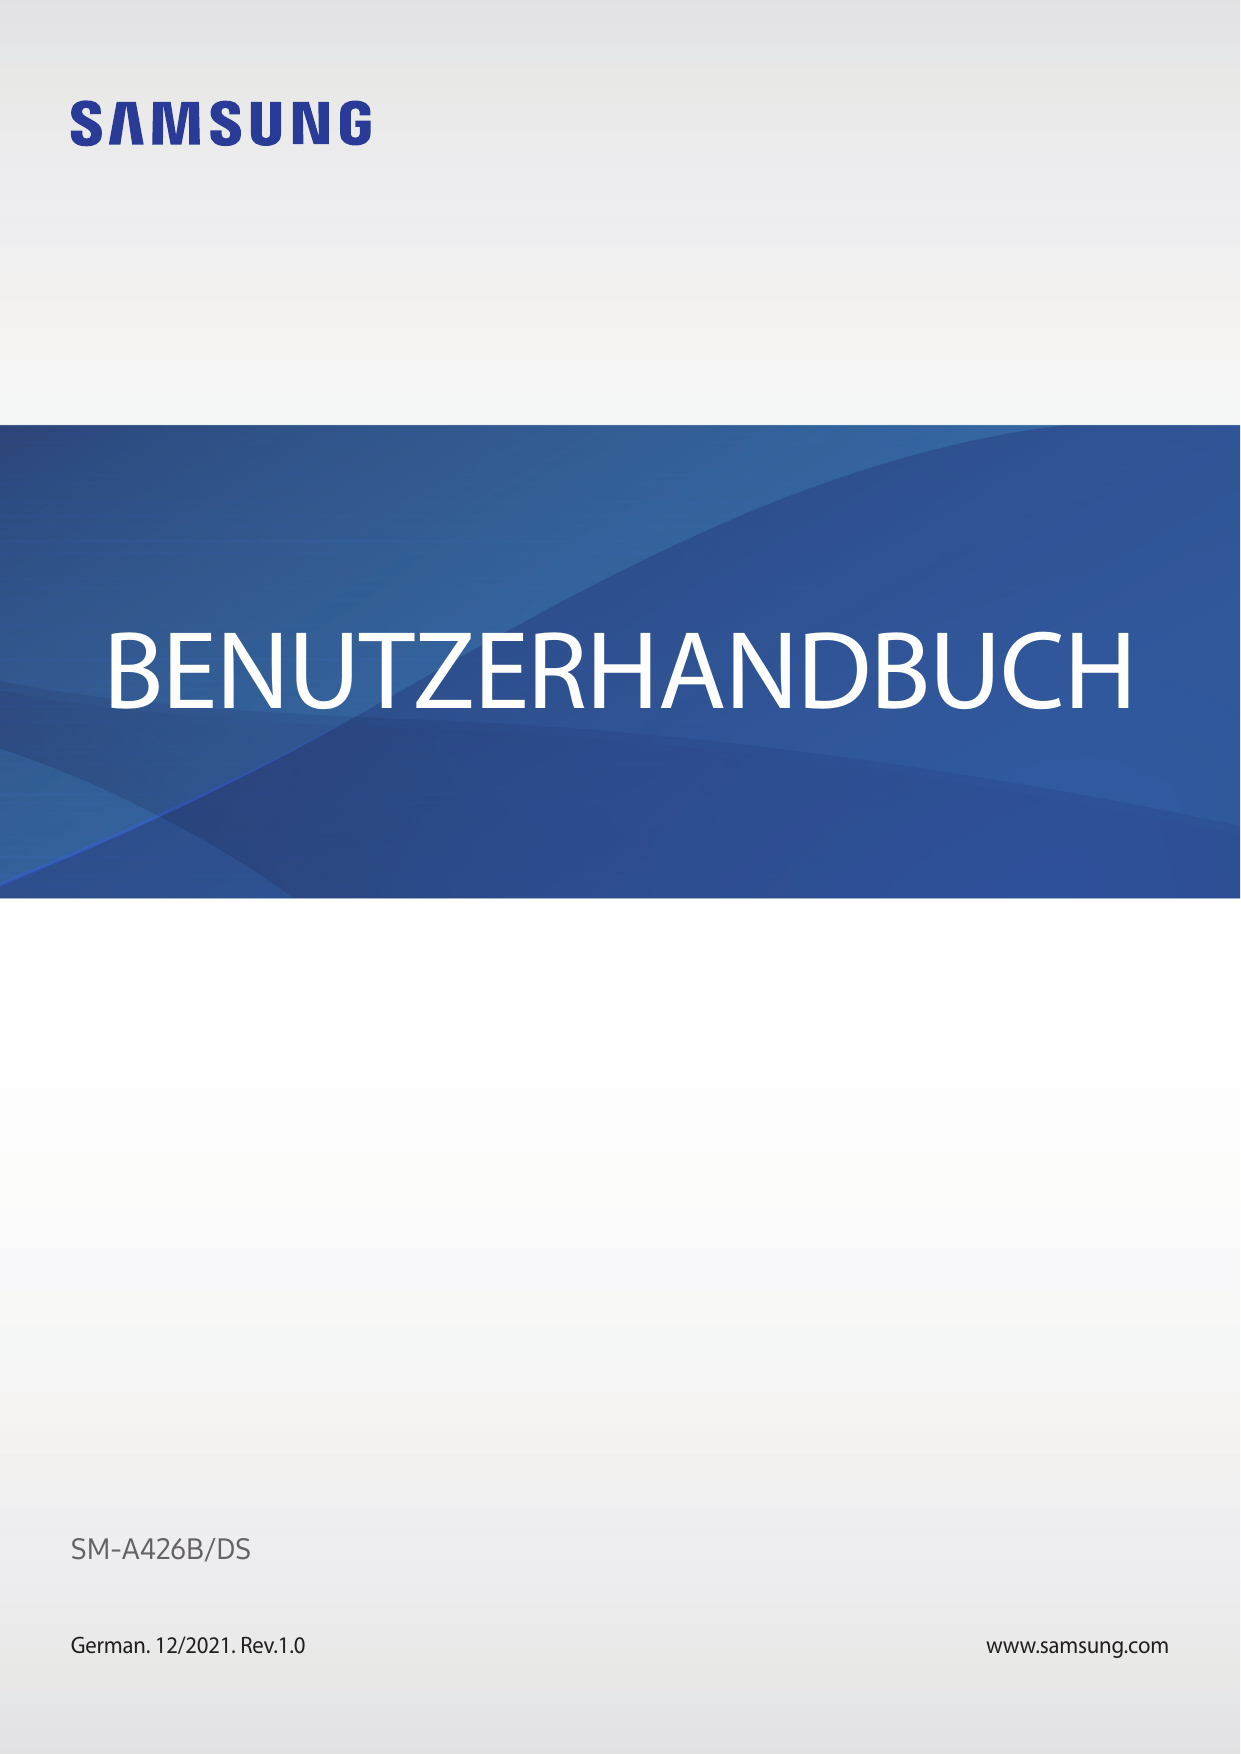 BENUTZERHANDBUCHSM-A426B/DSGerman. 12/2021. Rev.1.0www.samsung.com